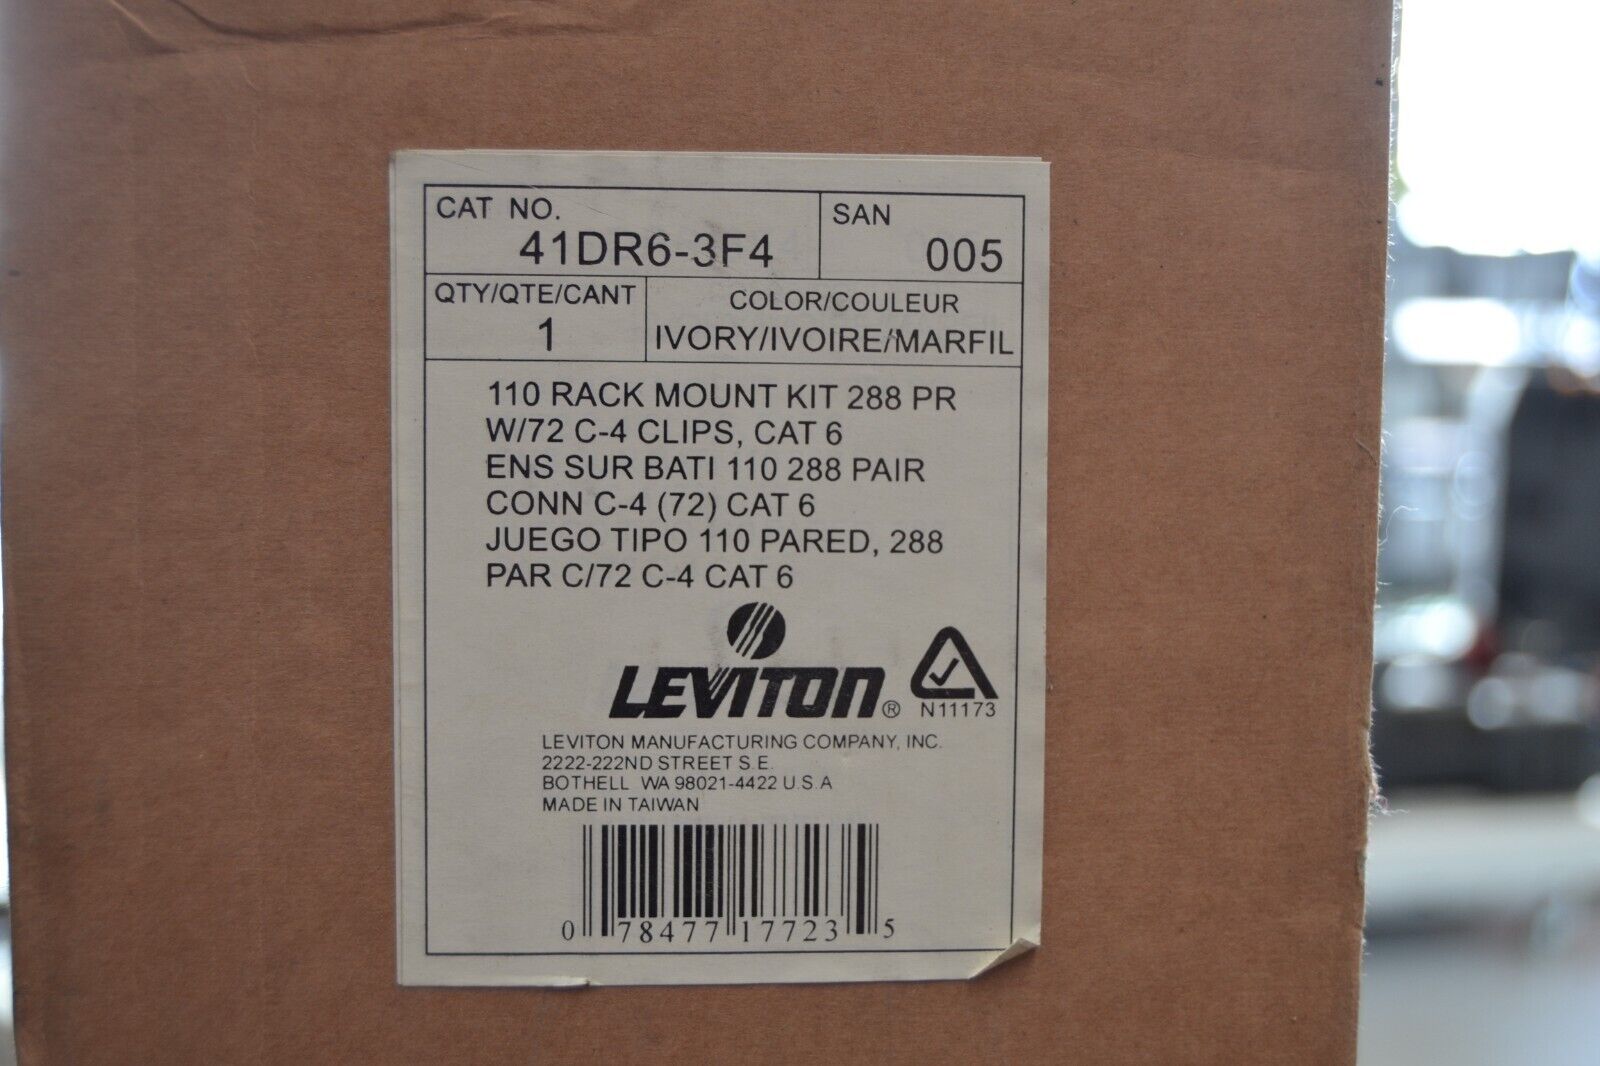 Leviton - 41DR6-3F4 - 110 Rack Mount Kit - 288 Pr w/ 72 C-4 Clips Cat 6 -  NEW